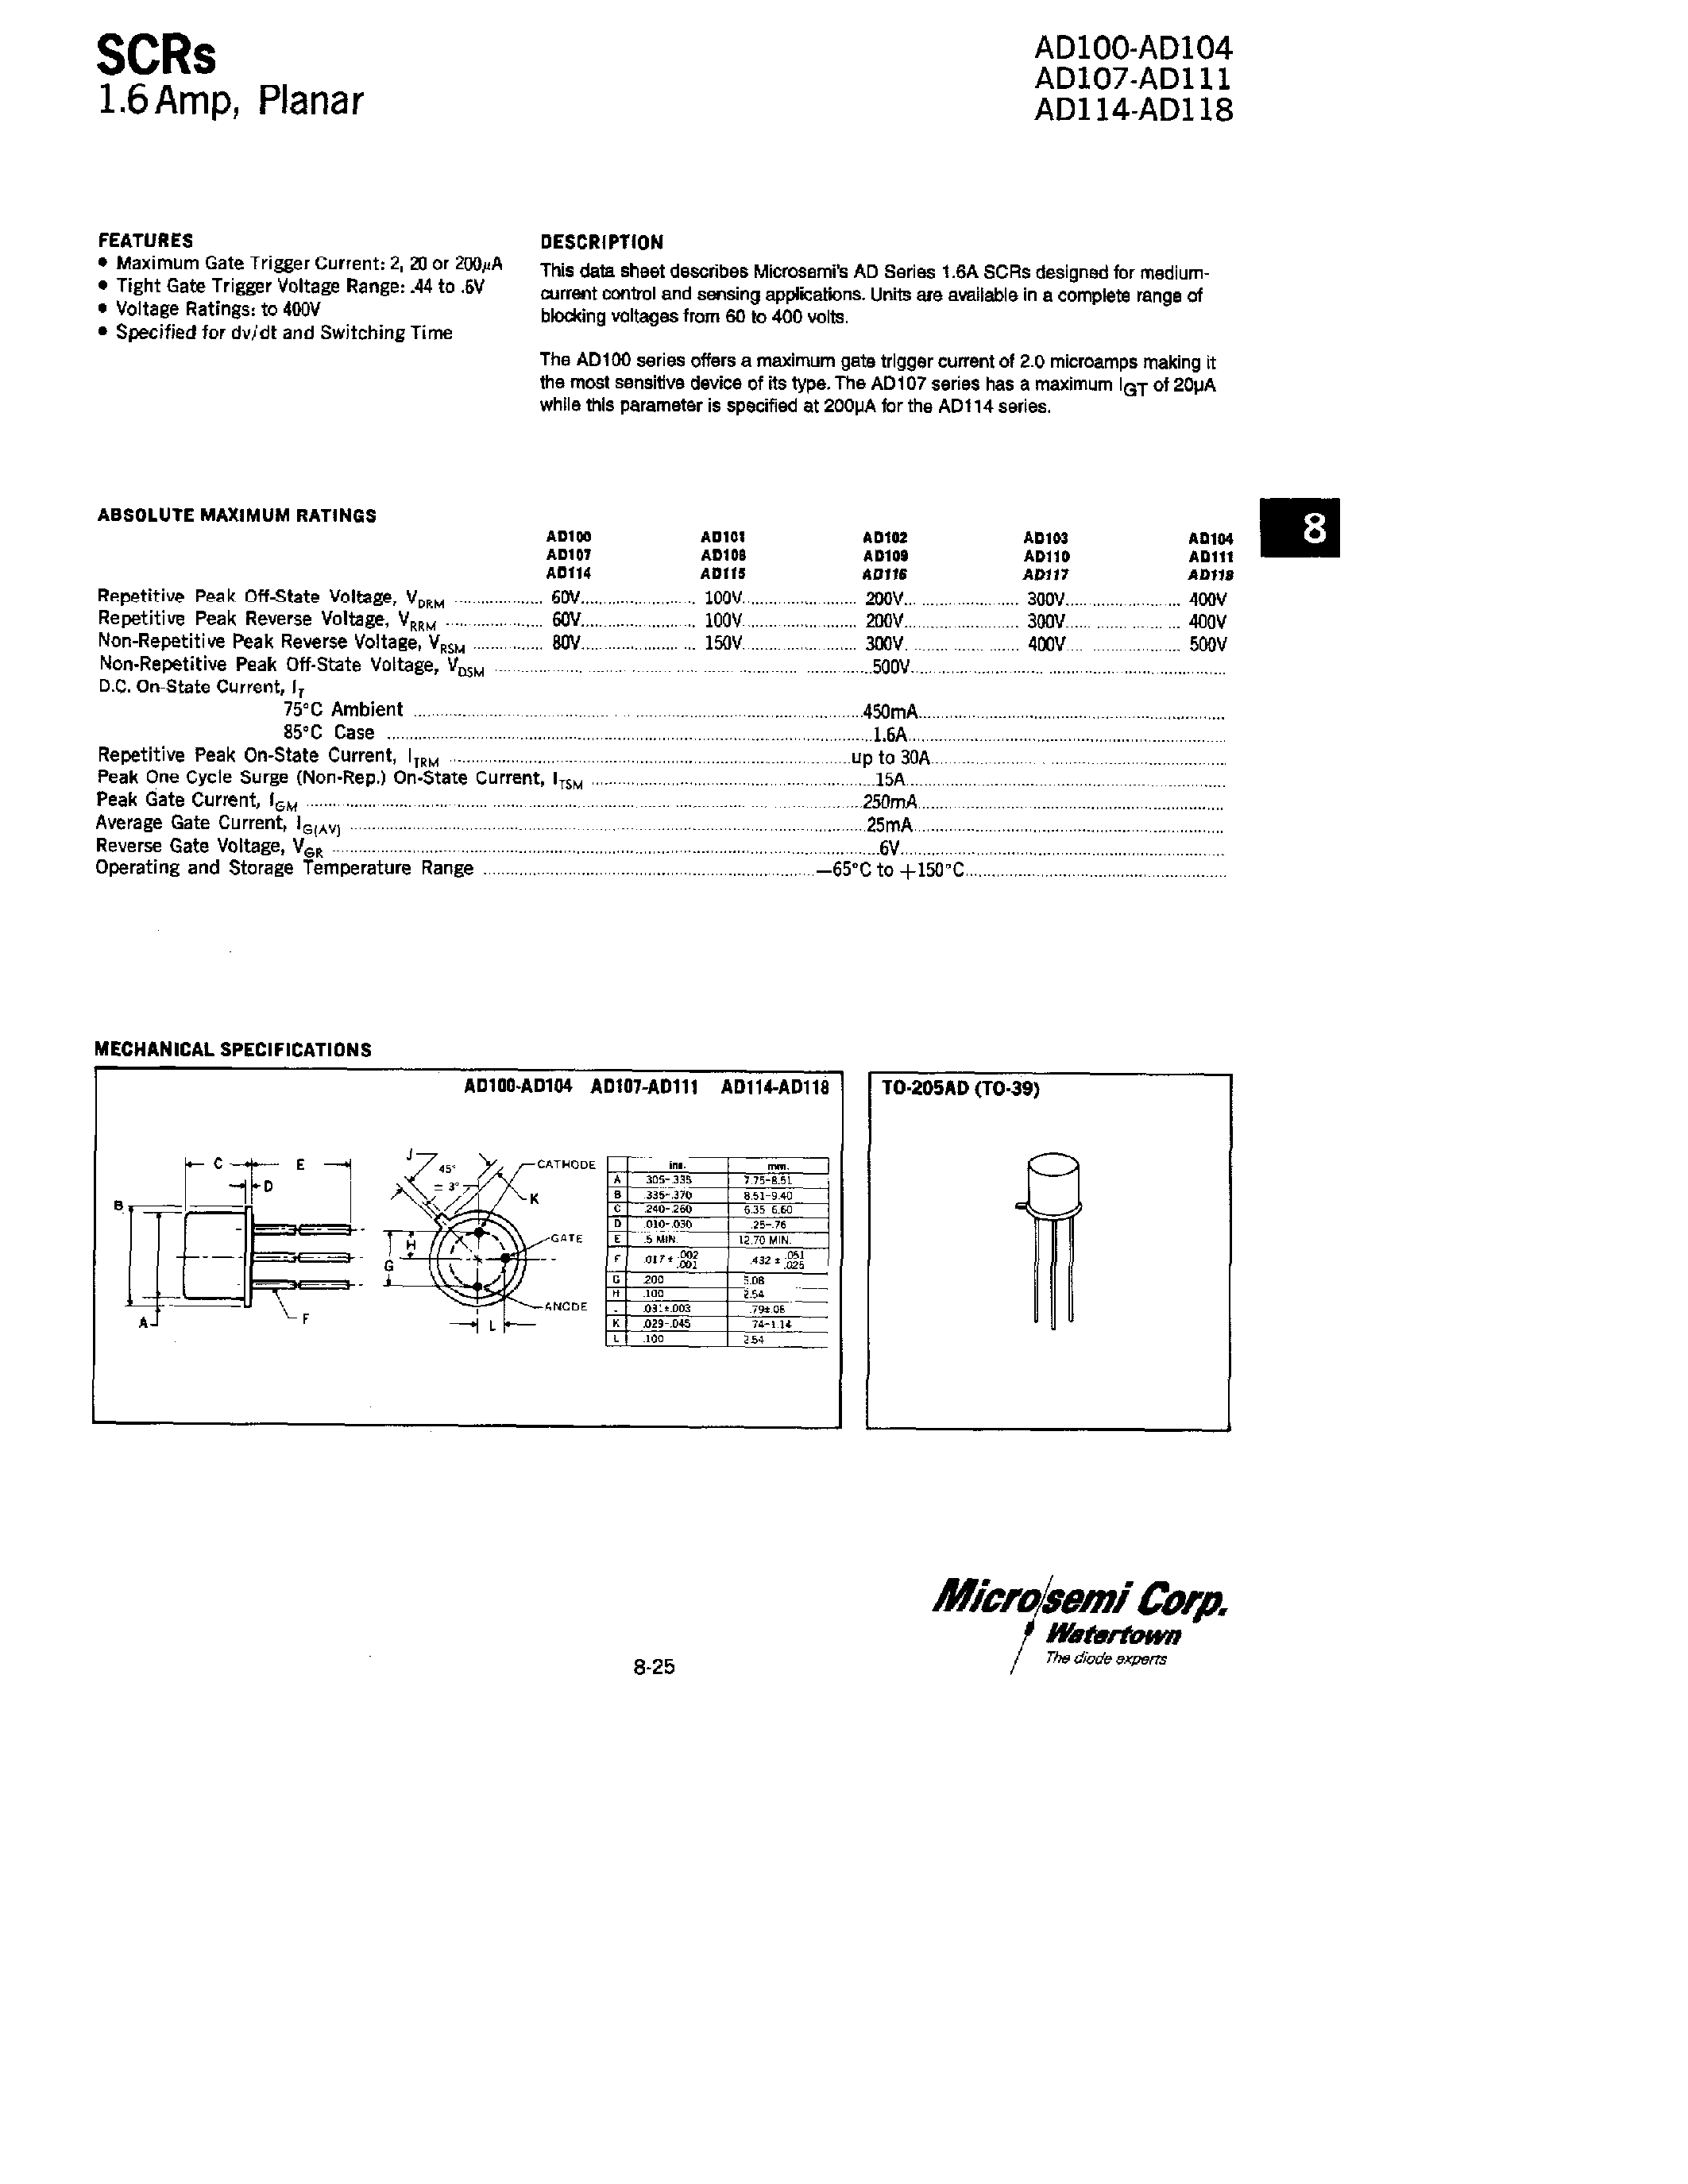 Datasheet AD115 - SCRs 1.5 Amp/ Planar page 1